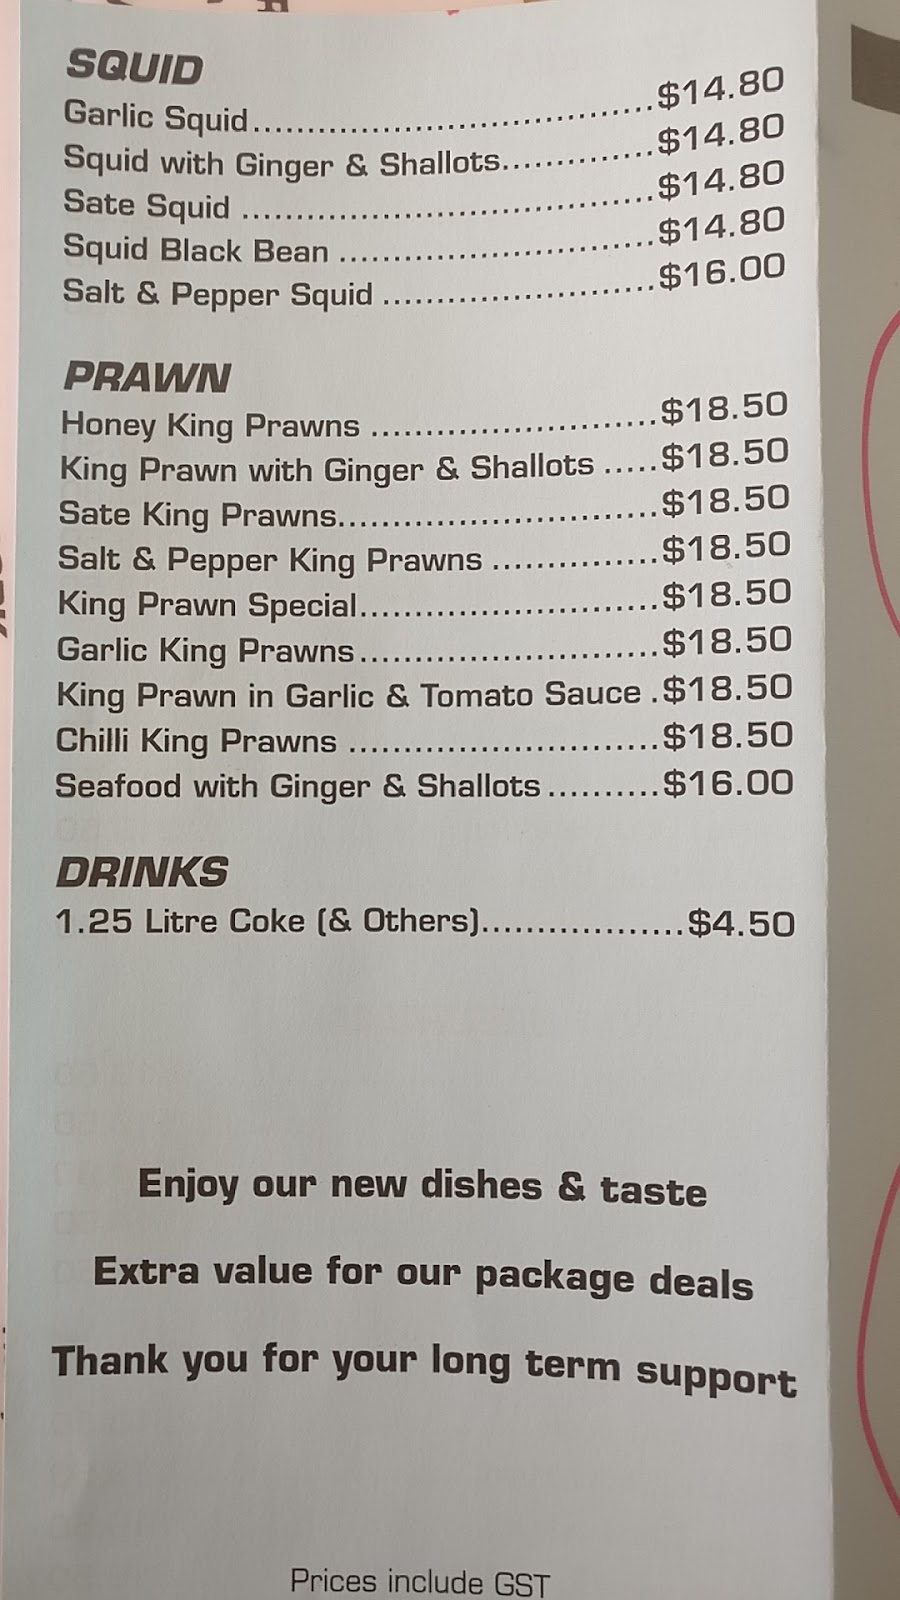 Putra Chinese Take-Away Foods | meal takeaway | 52 Orchardtown Rd, New Lambton NSW 2305, Australia | 0249561077 OR +61 2 4956 1077